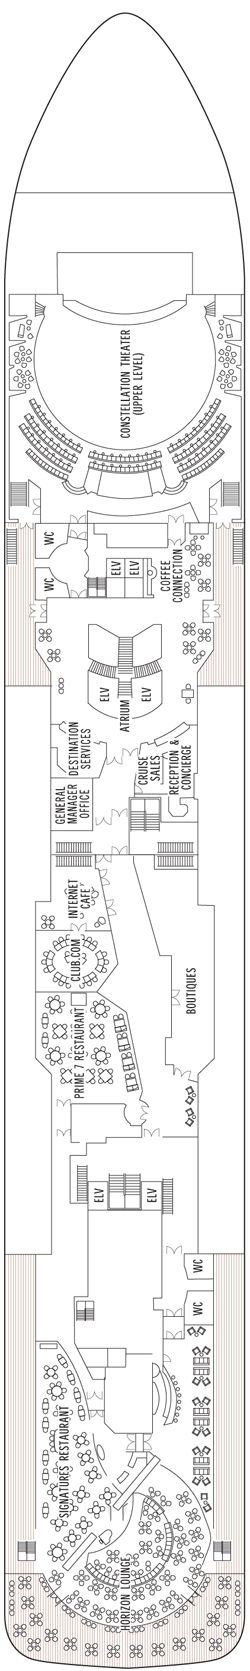 Seven Seas Voyager Deck Plans